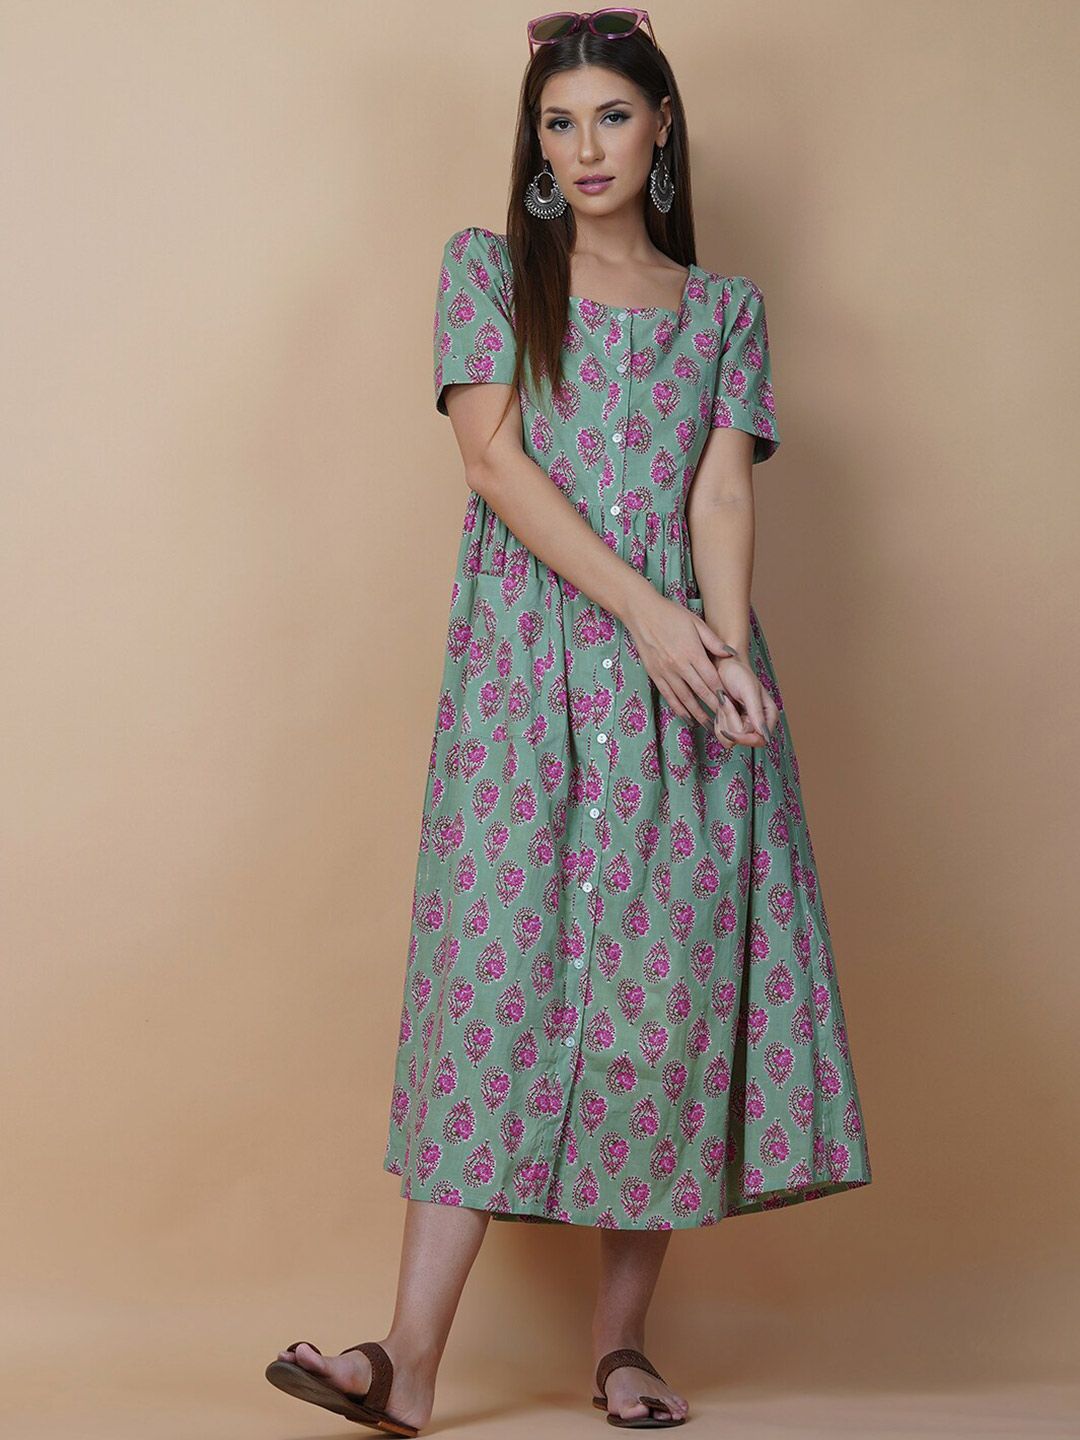 Twilldor Green Floral Ethnic A-Line Midi Cotton Dress Price in India